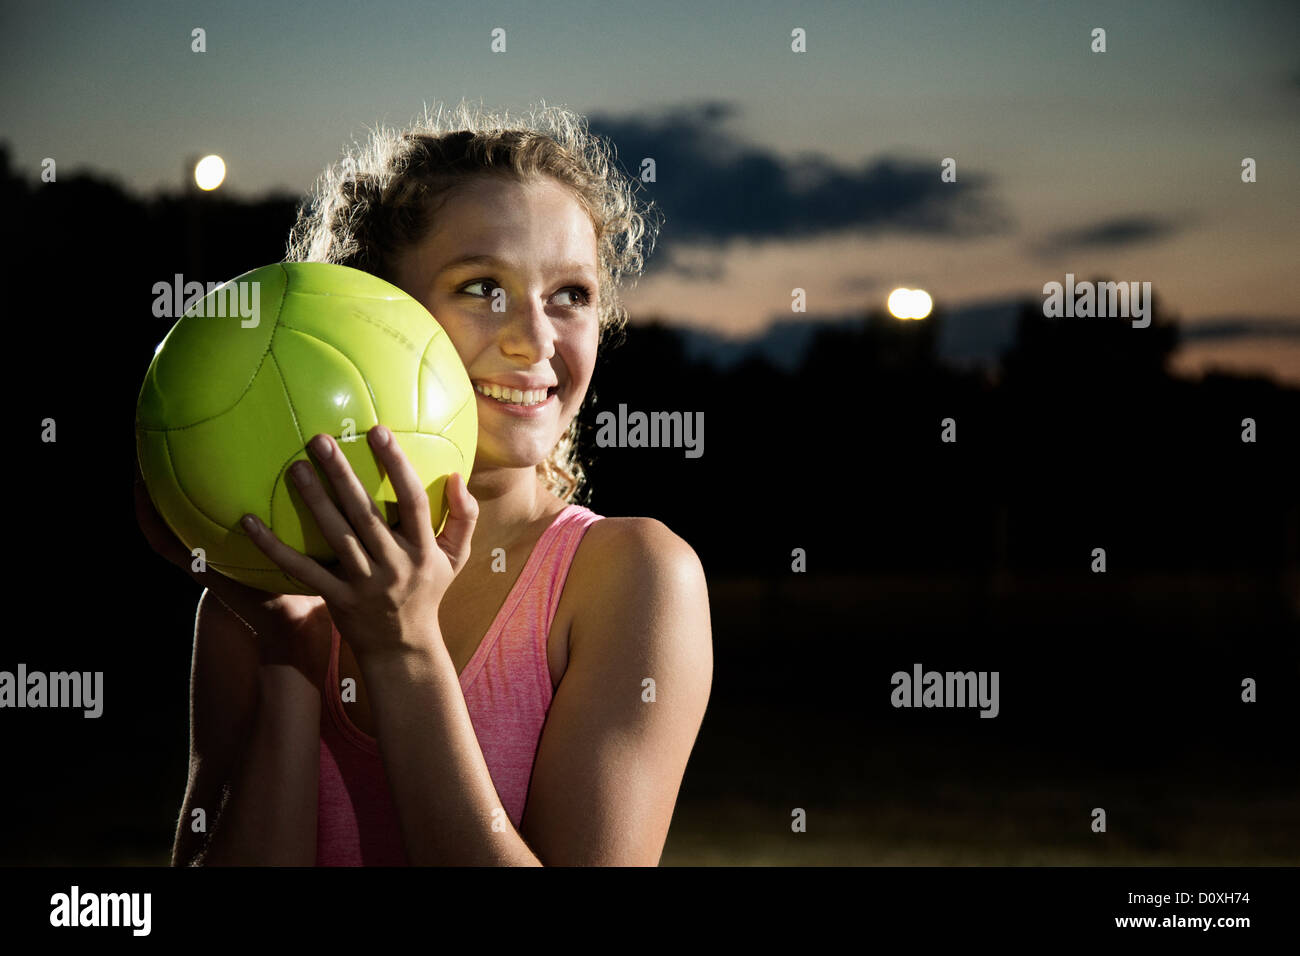 Girl holding soccer ball at night Stock Photo